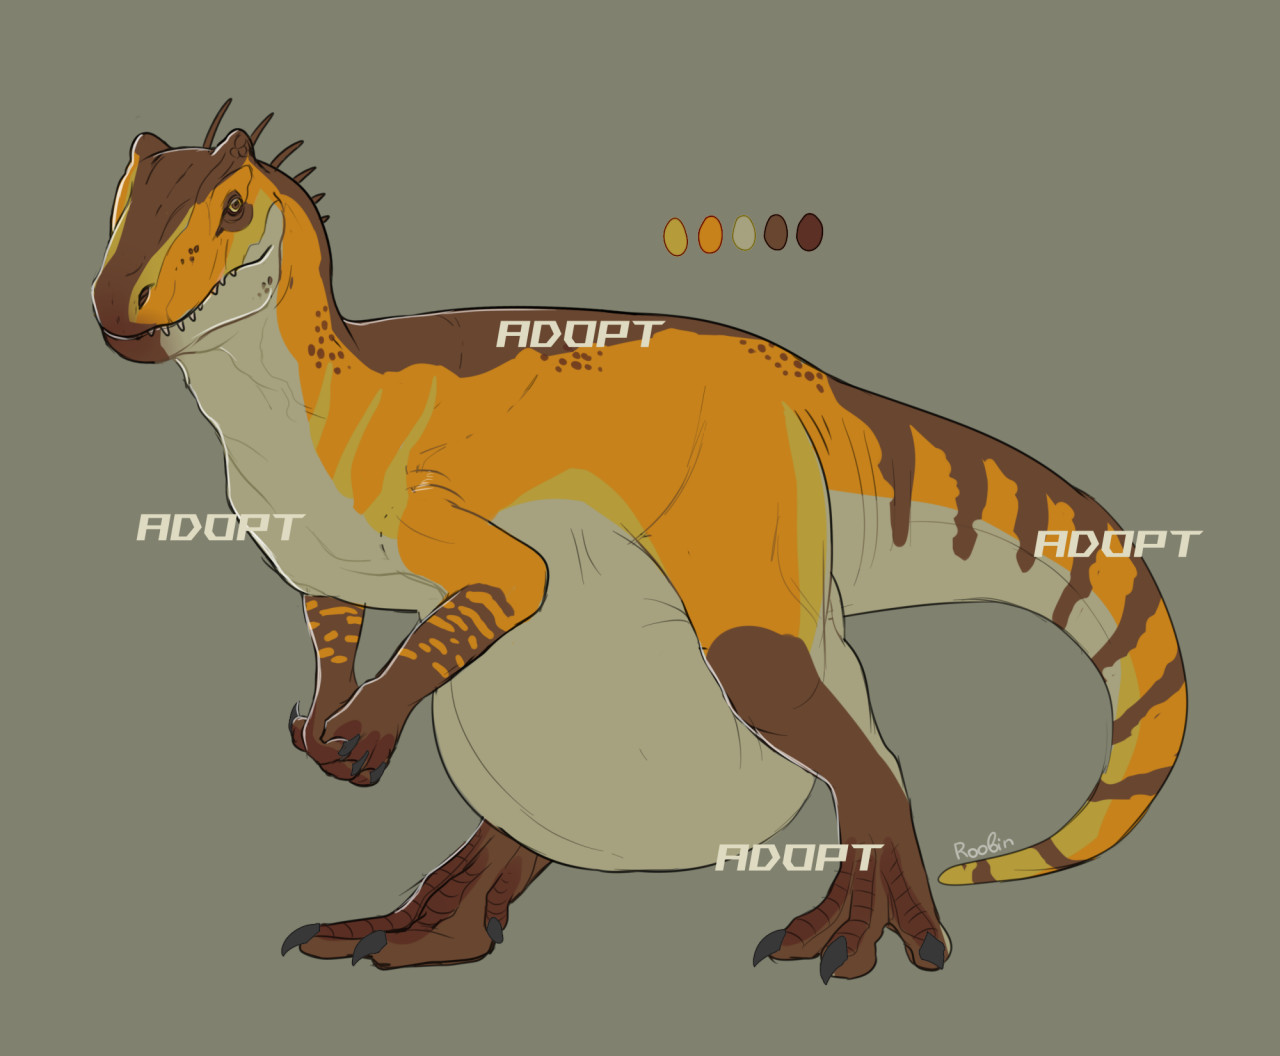 Roblox meme by RoseyRoseDinosaur on DeviantArt